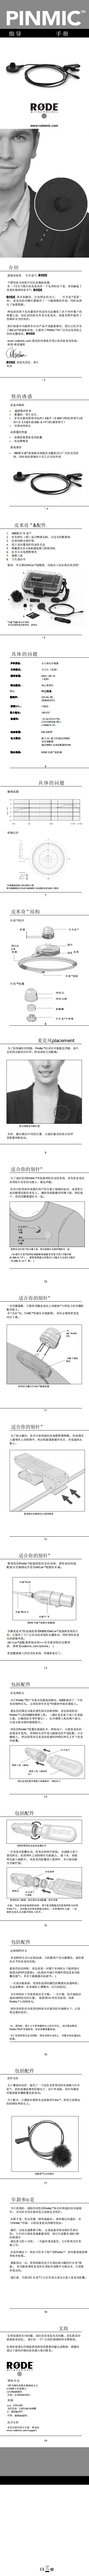 PinMic_product_manual_1_20_translate_Chinese_0.png